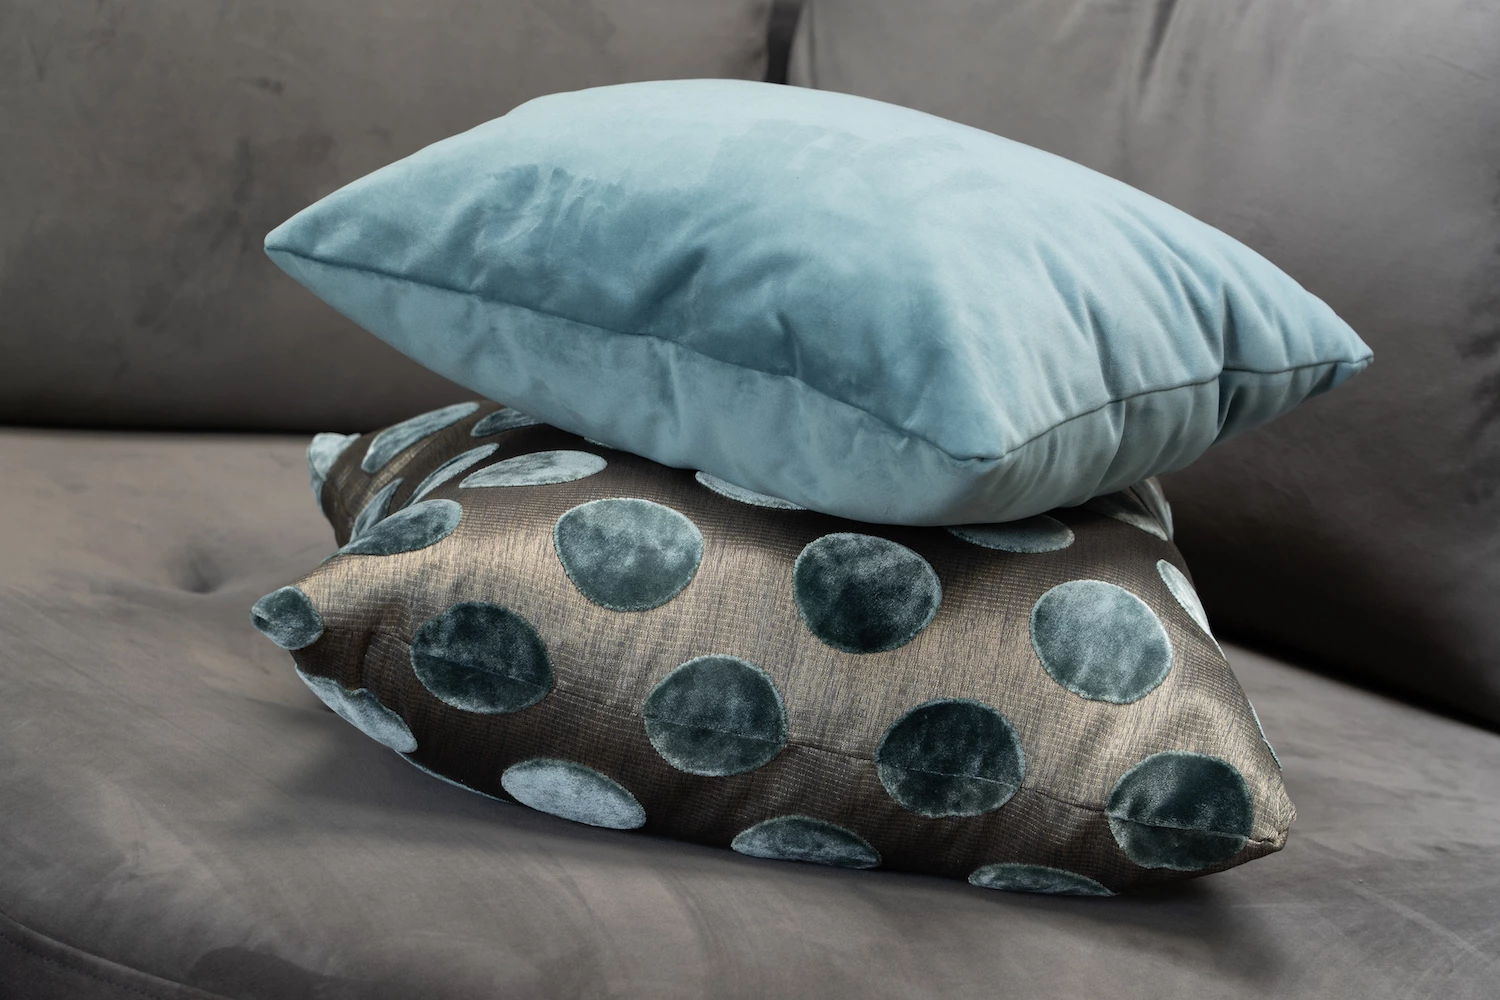 Cushions piled on sofa